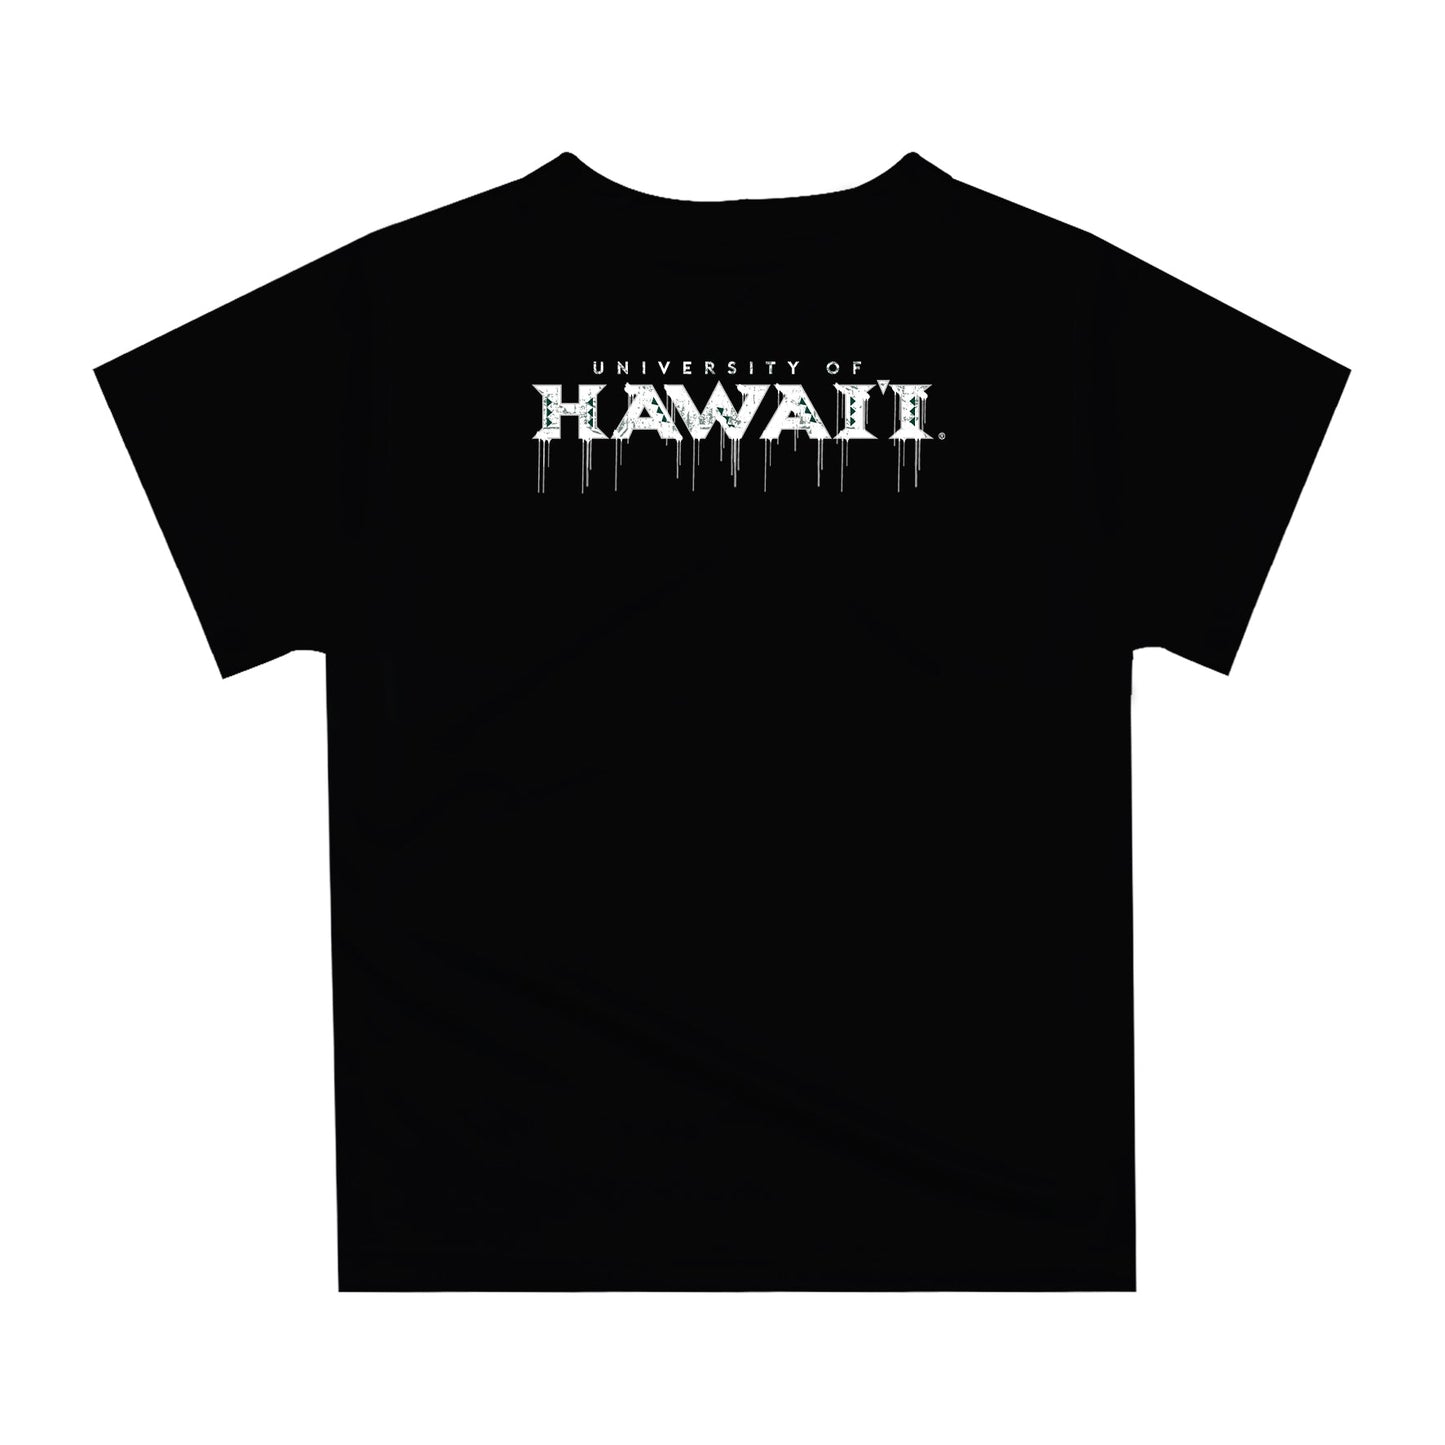 Hawaii Rainbow Warriors Original Dripping Football Helmet Black T-Shirt by Vive La Fete